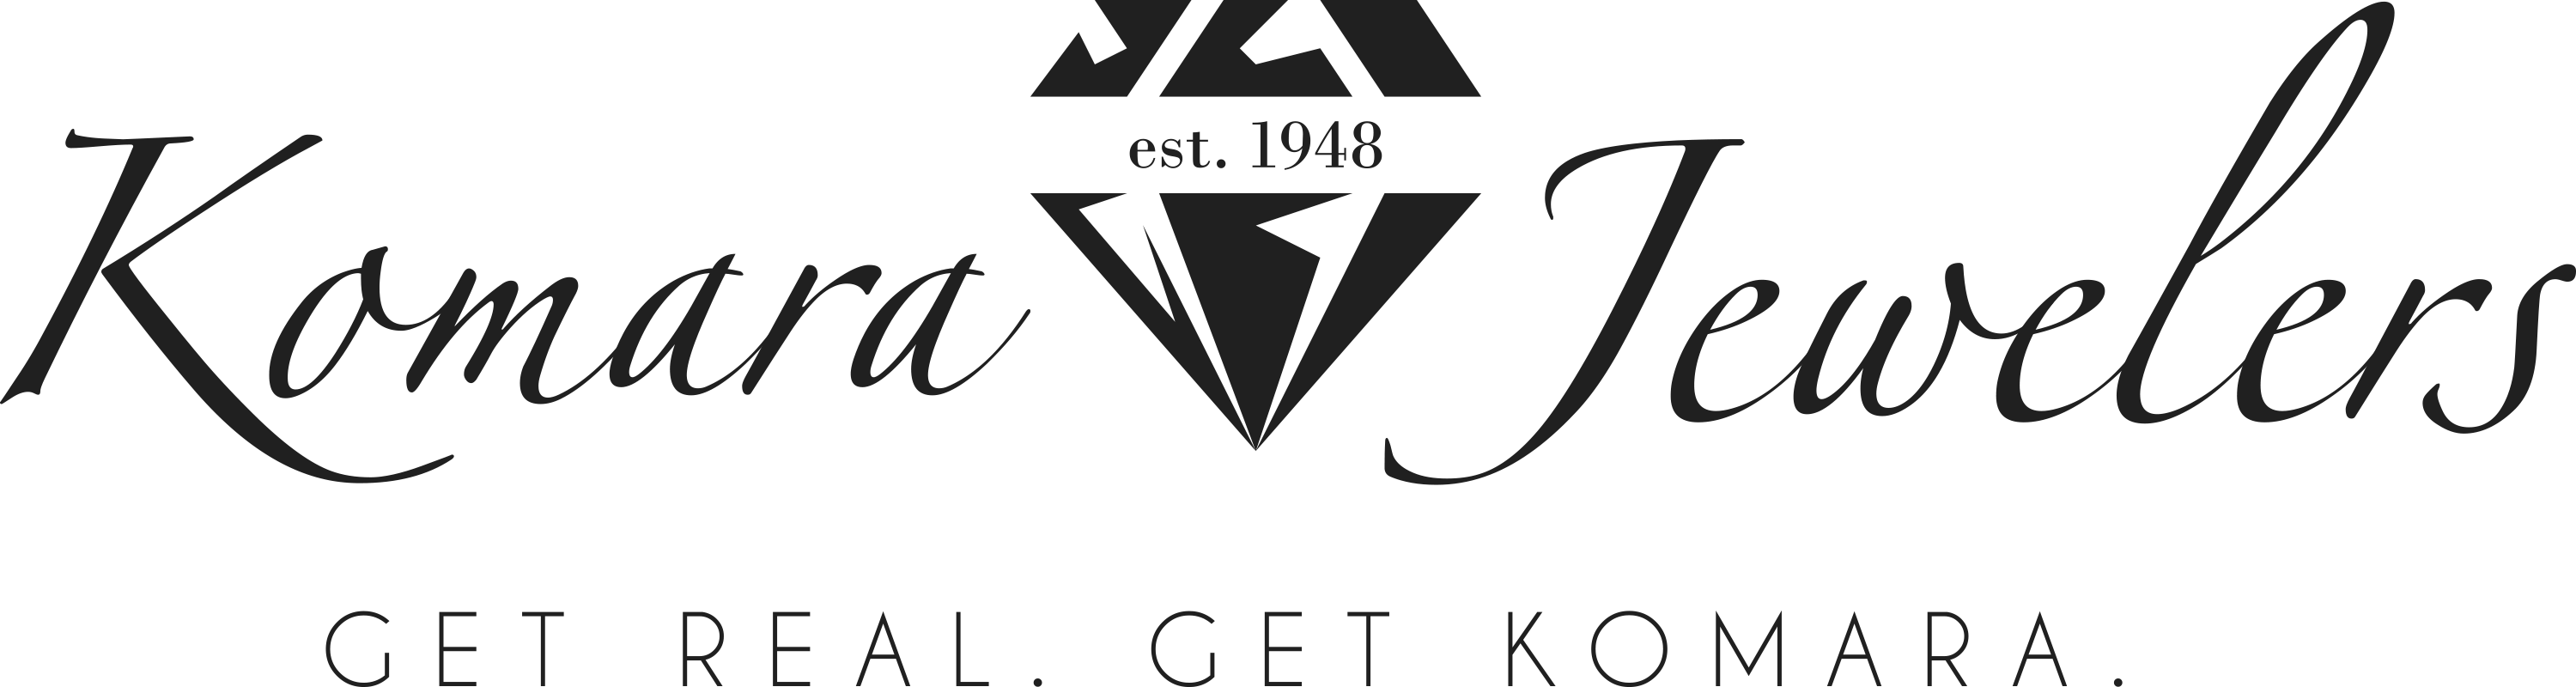 Komara Jewelers logo